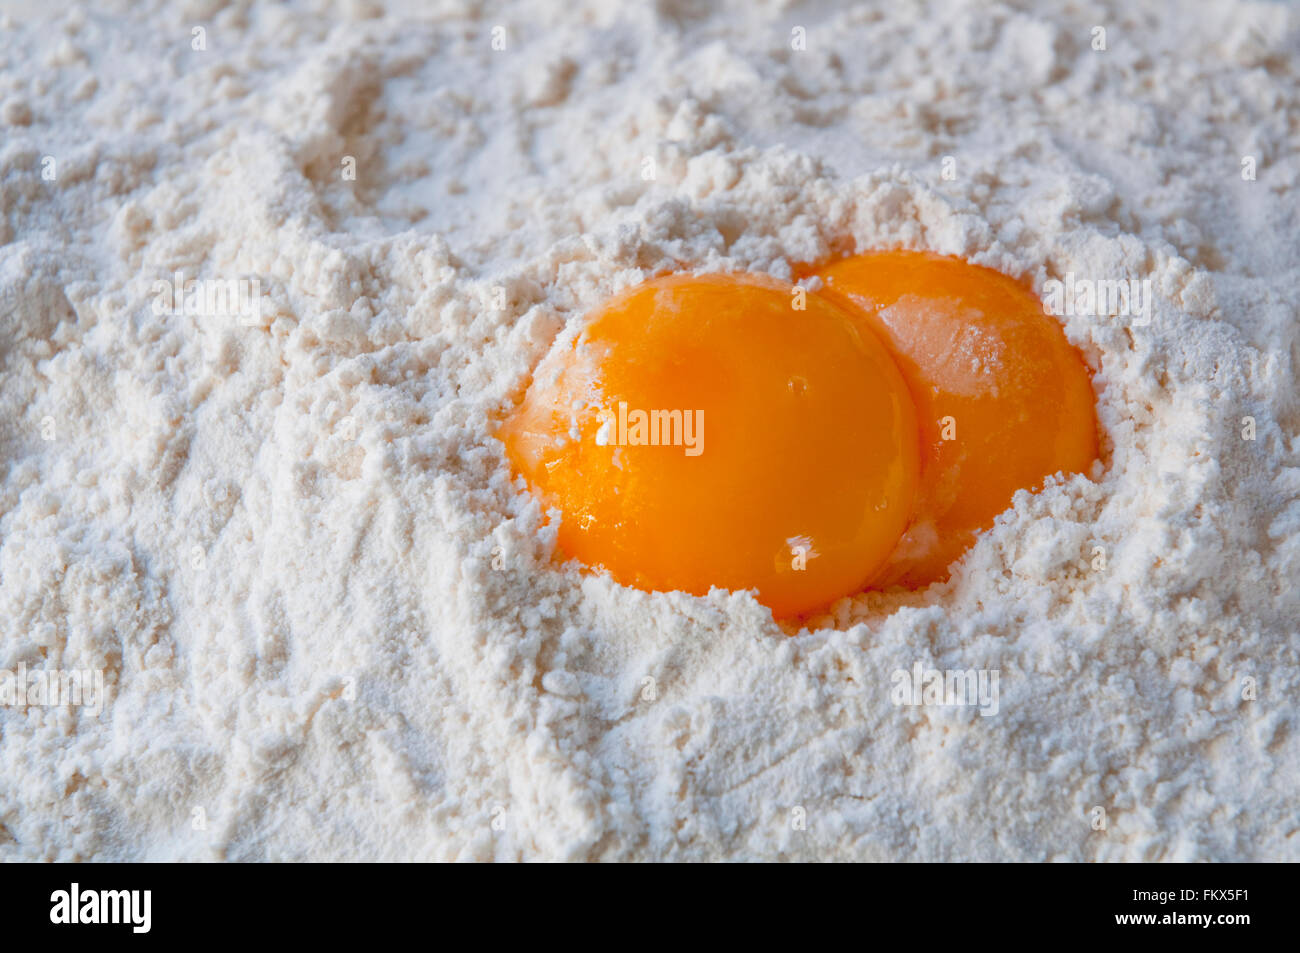 Two egg yolks on flour. Close view. Stock Photo